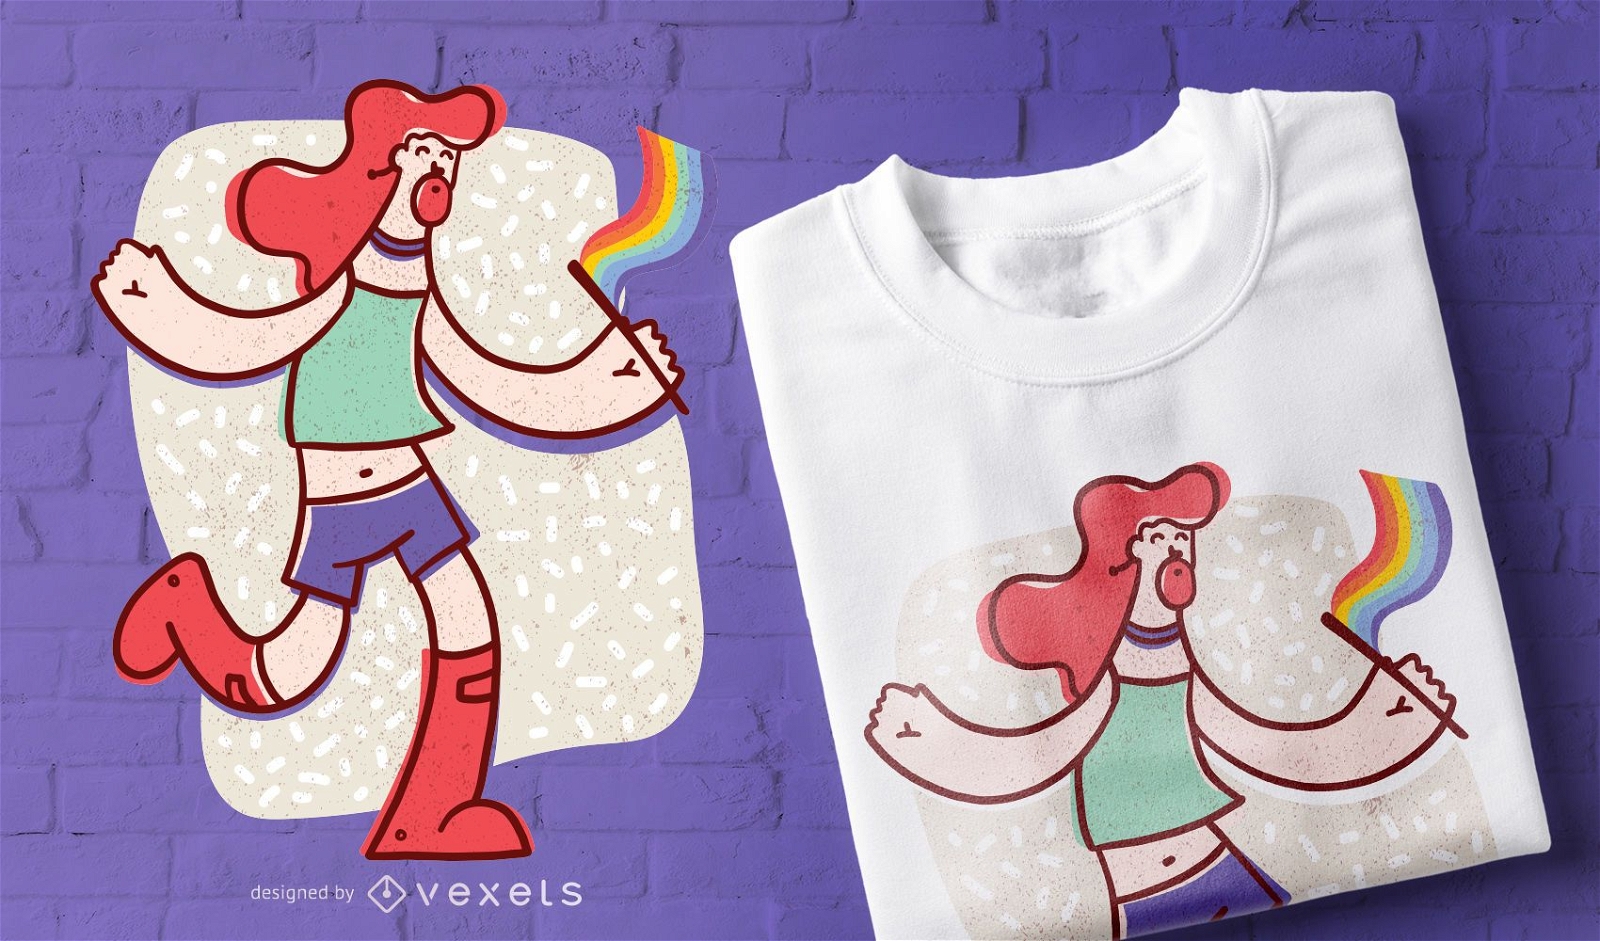 Rainbow pride flag t-shirt design